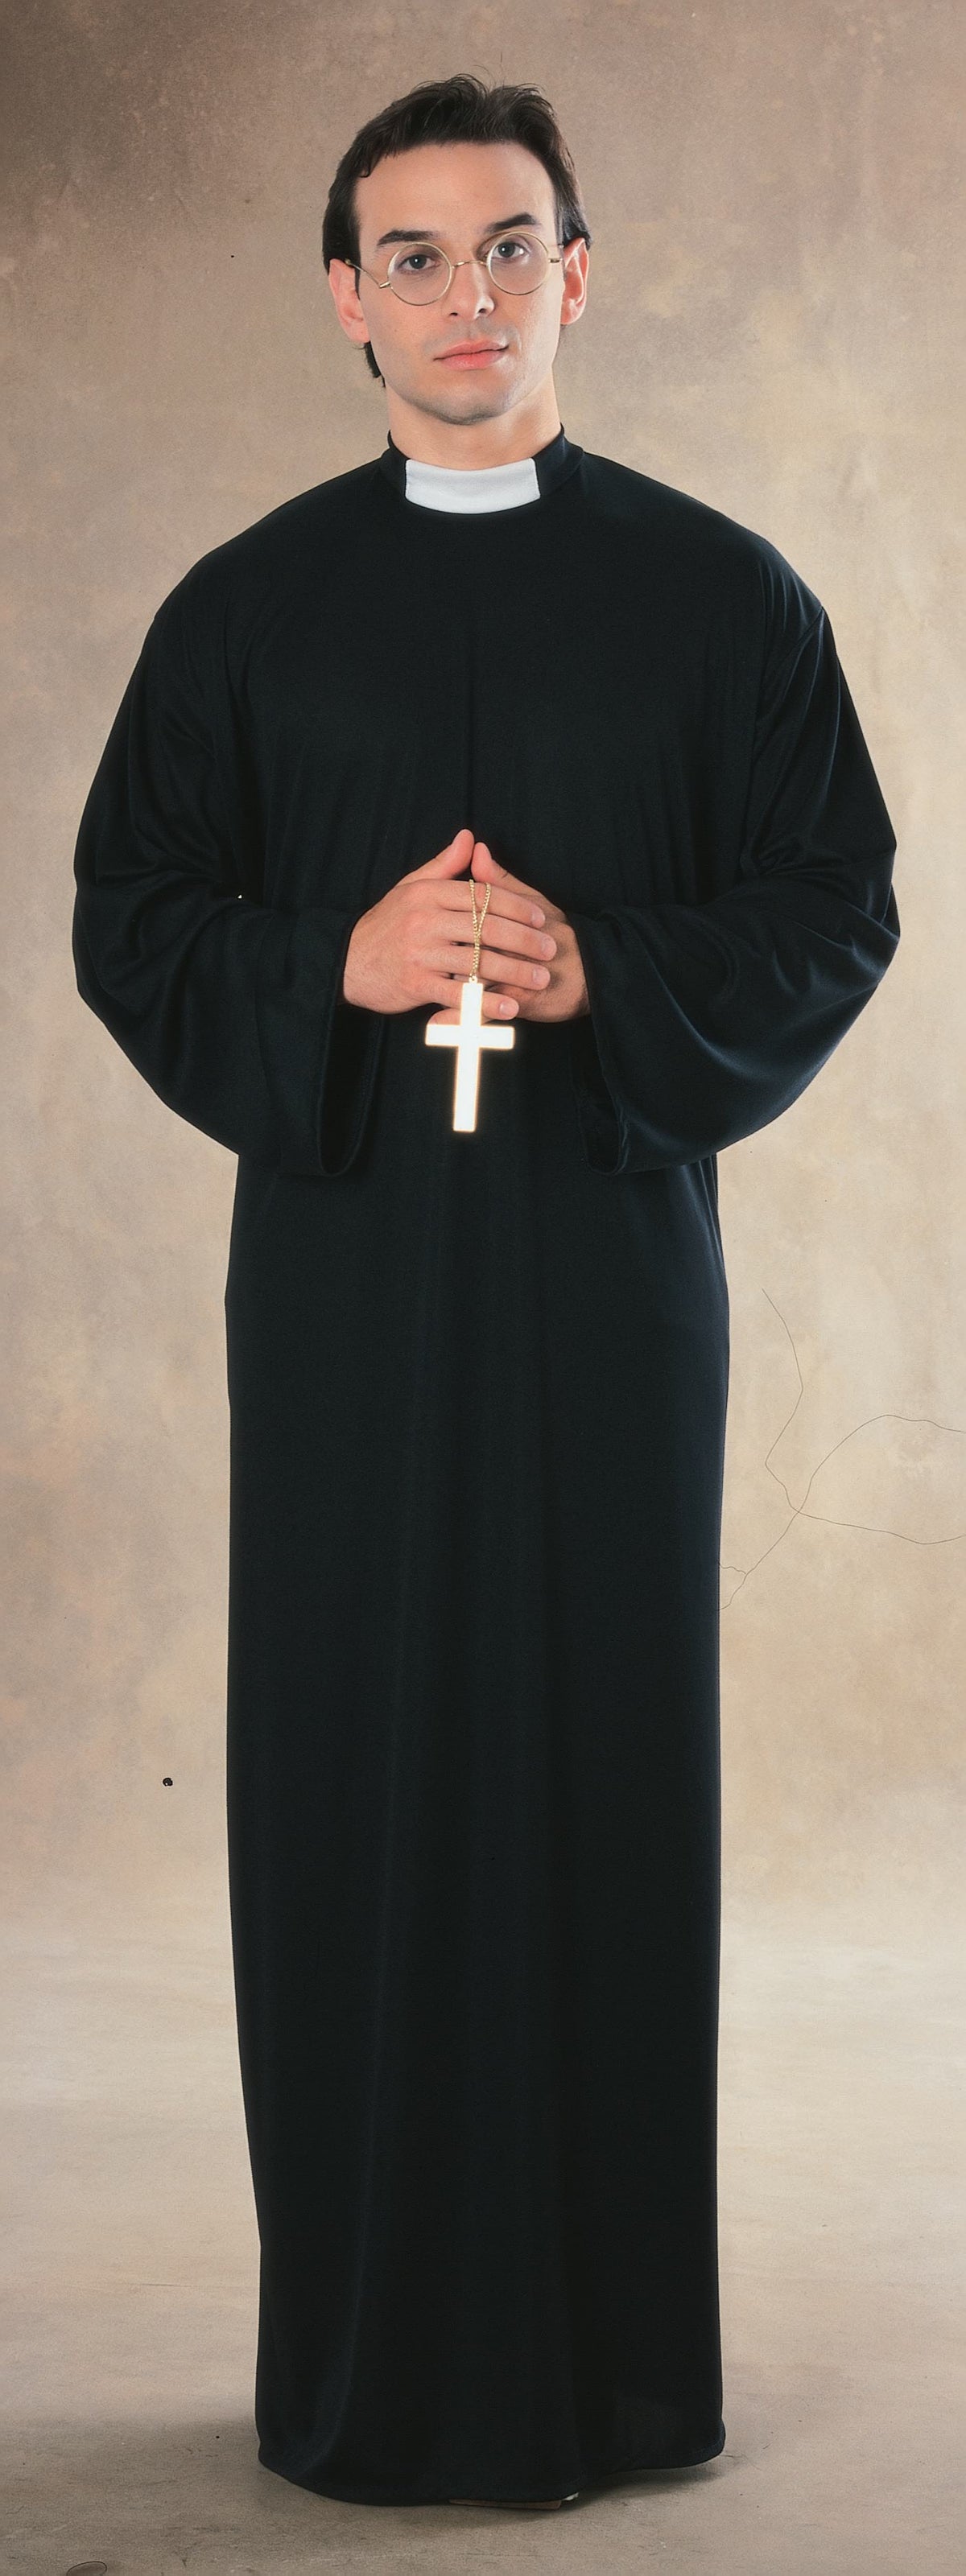 PRIEST OPP COSTUME - SIZE STD